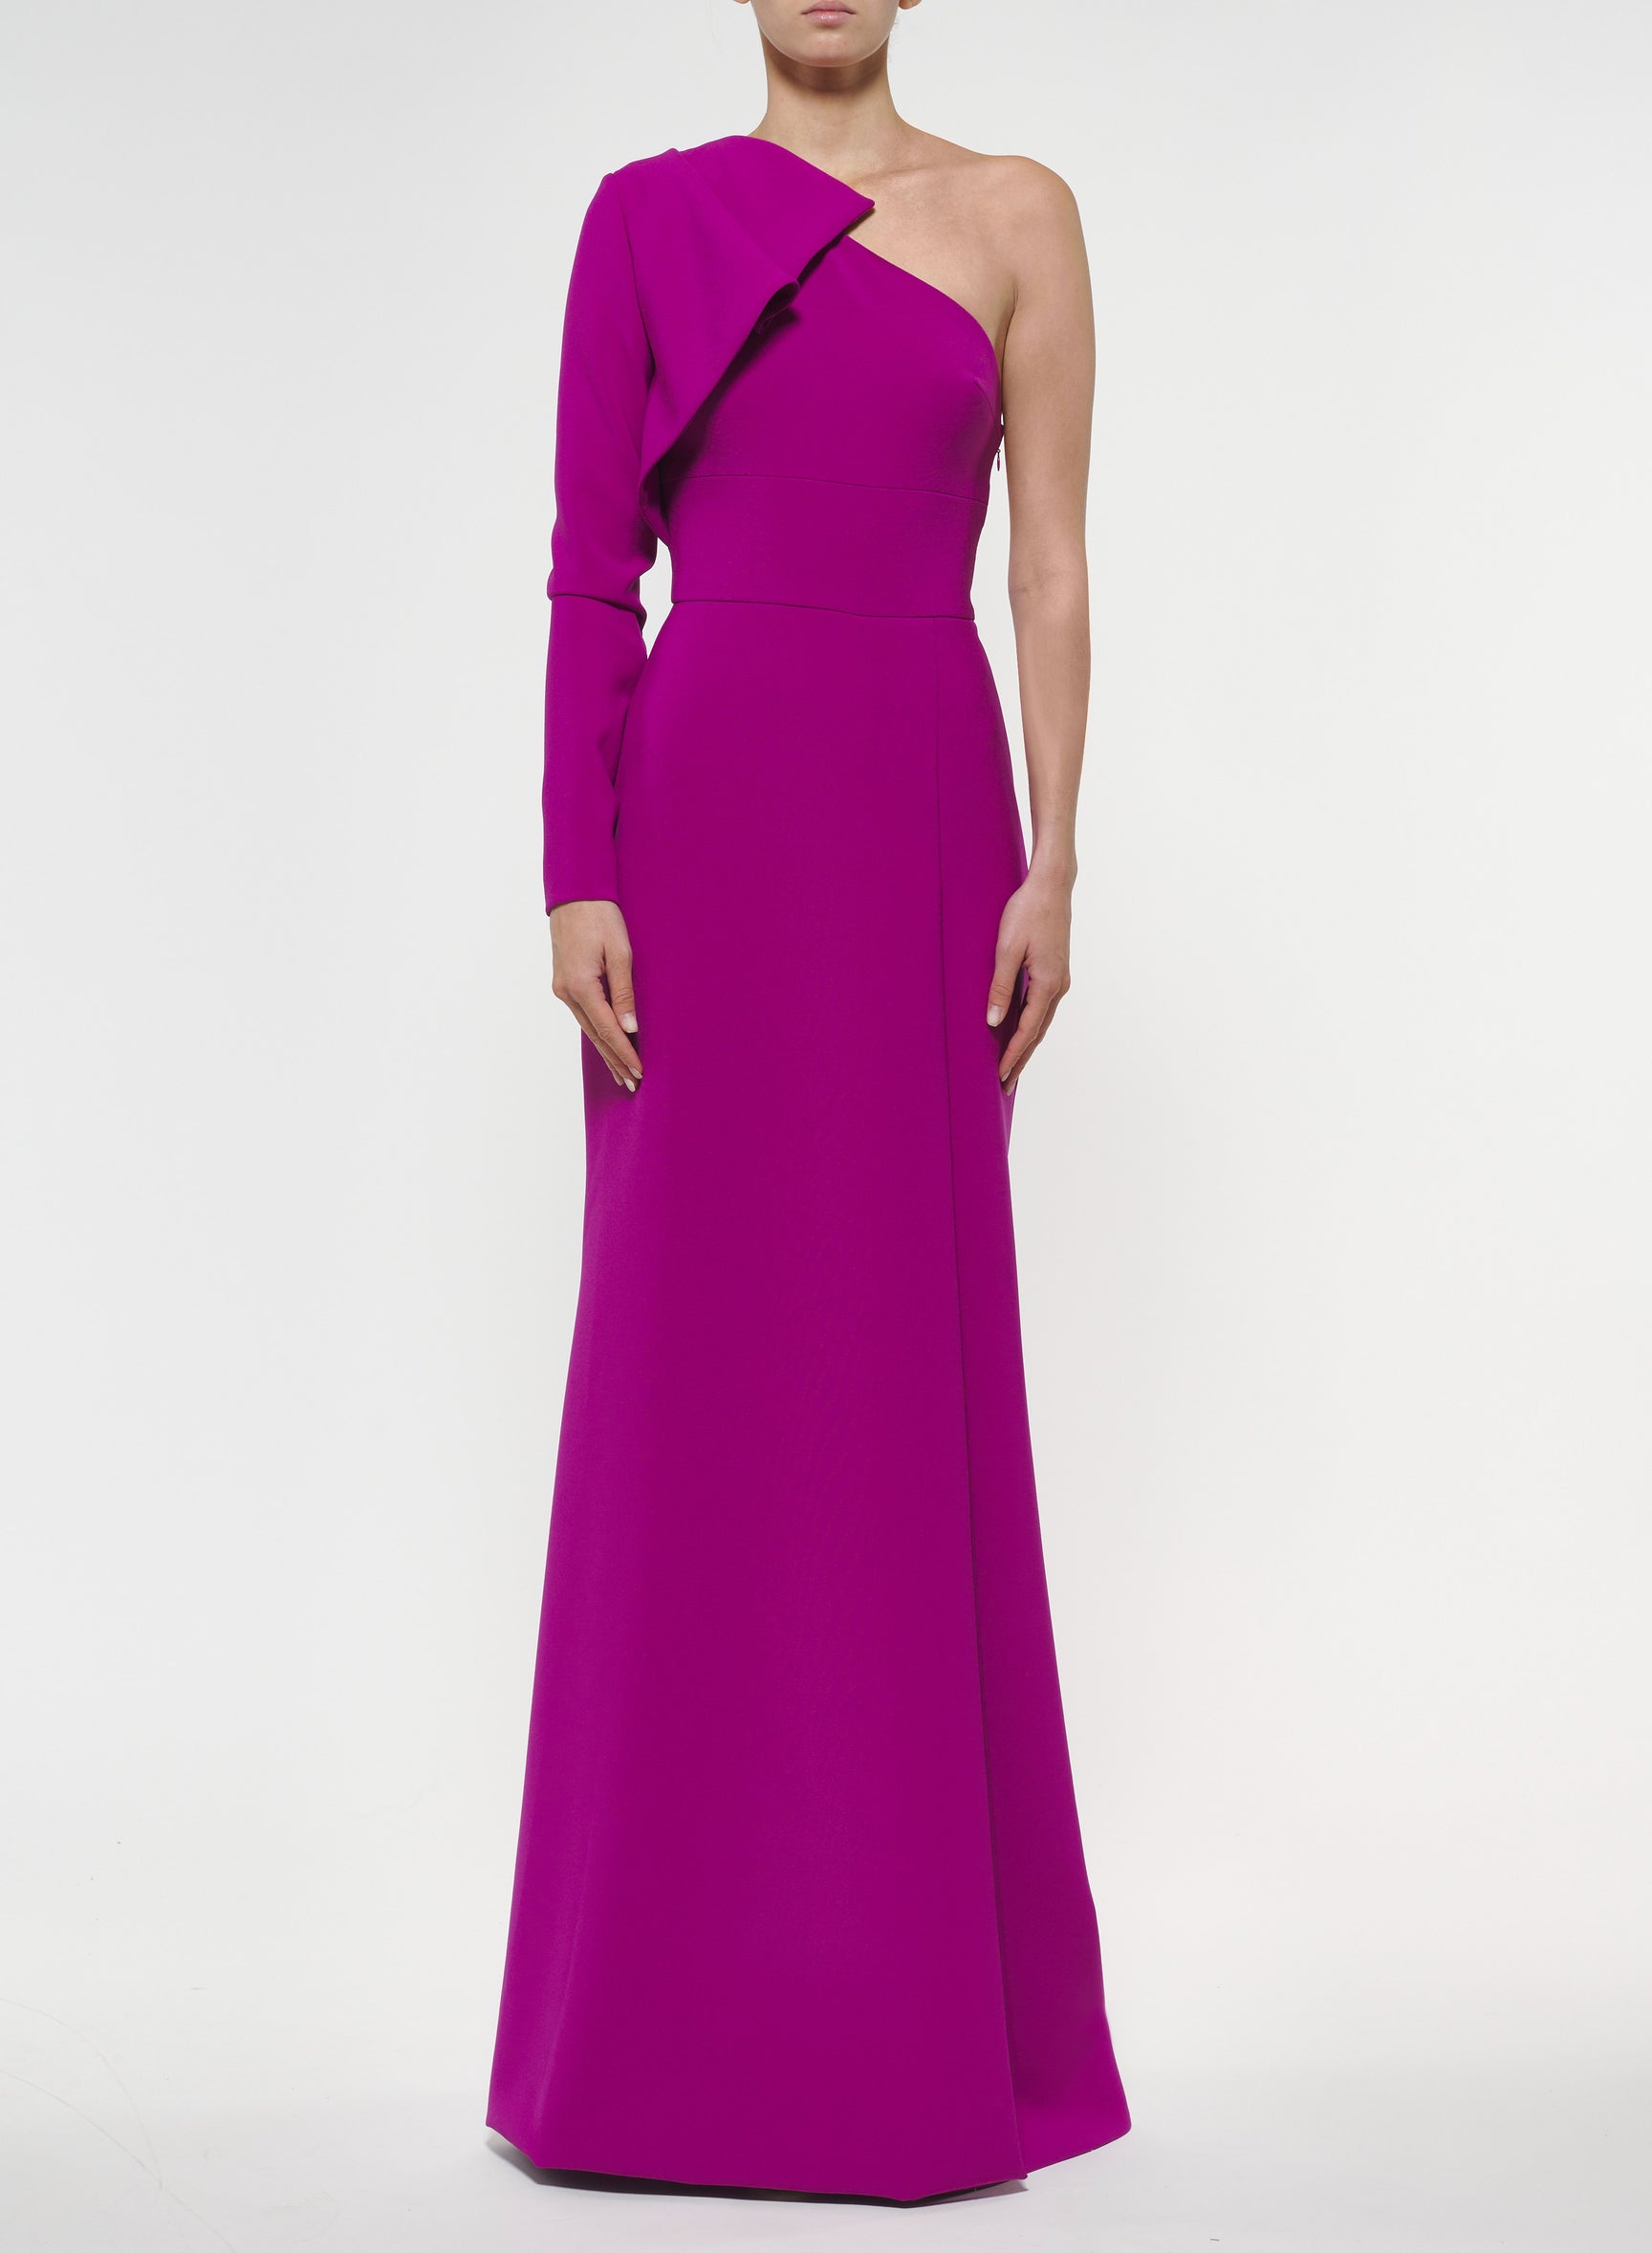 Designer Ready-to-Wear Dresses for Women - ELIE SAAB